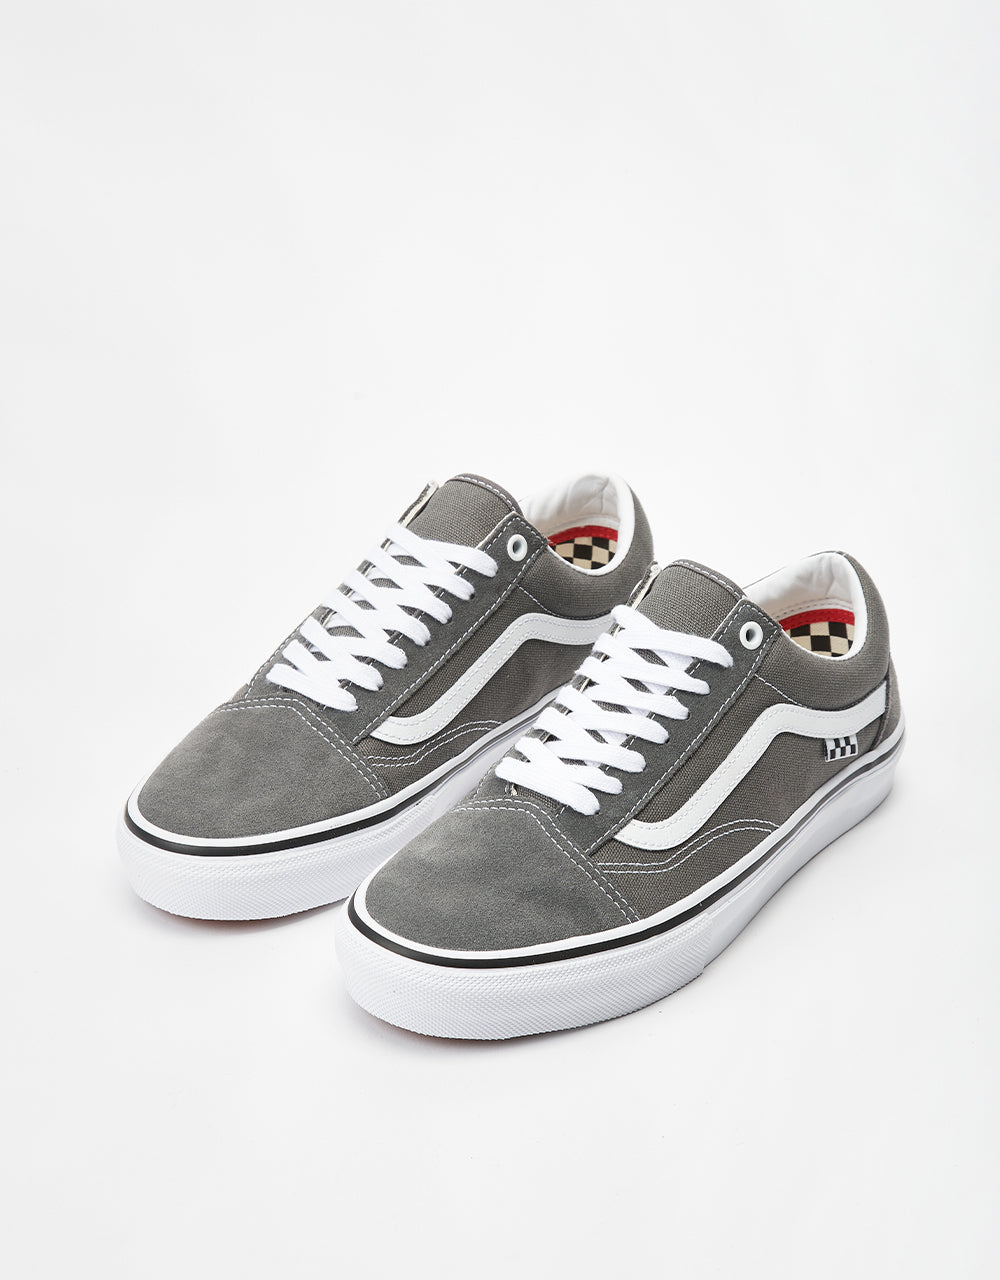 Vans Old Skool Skate Shoes - Pewter/White